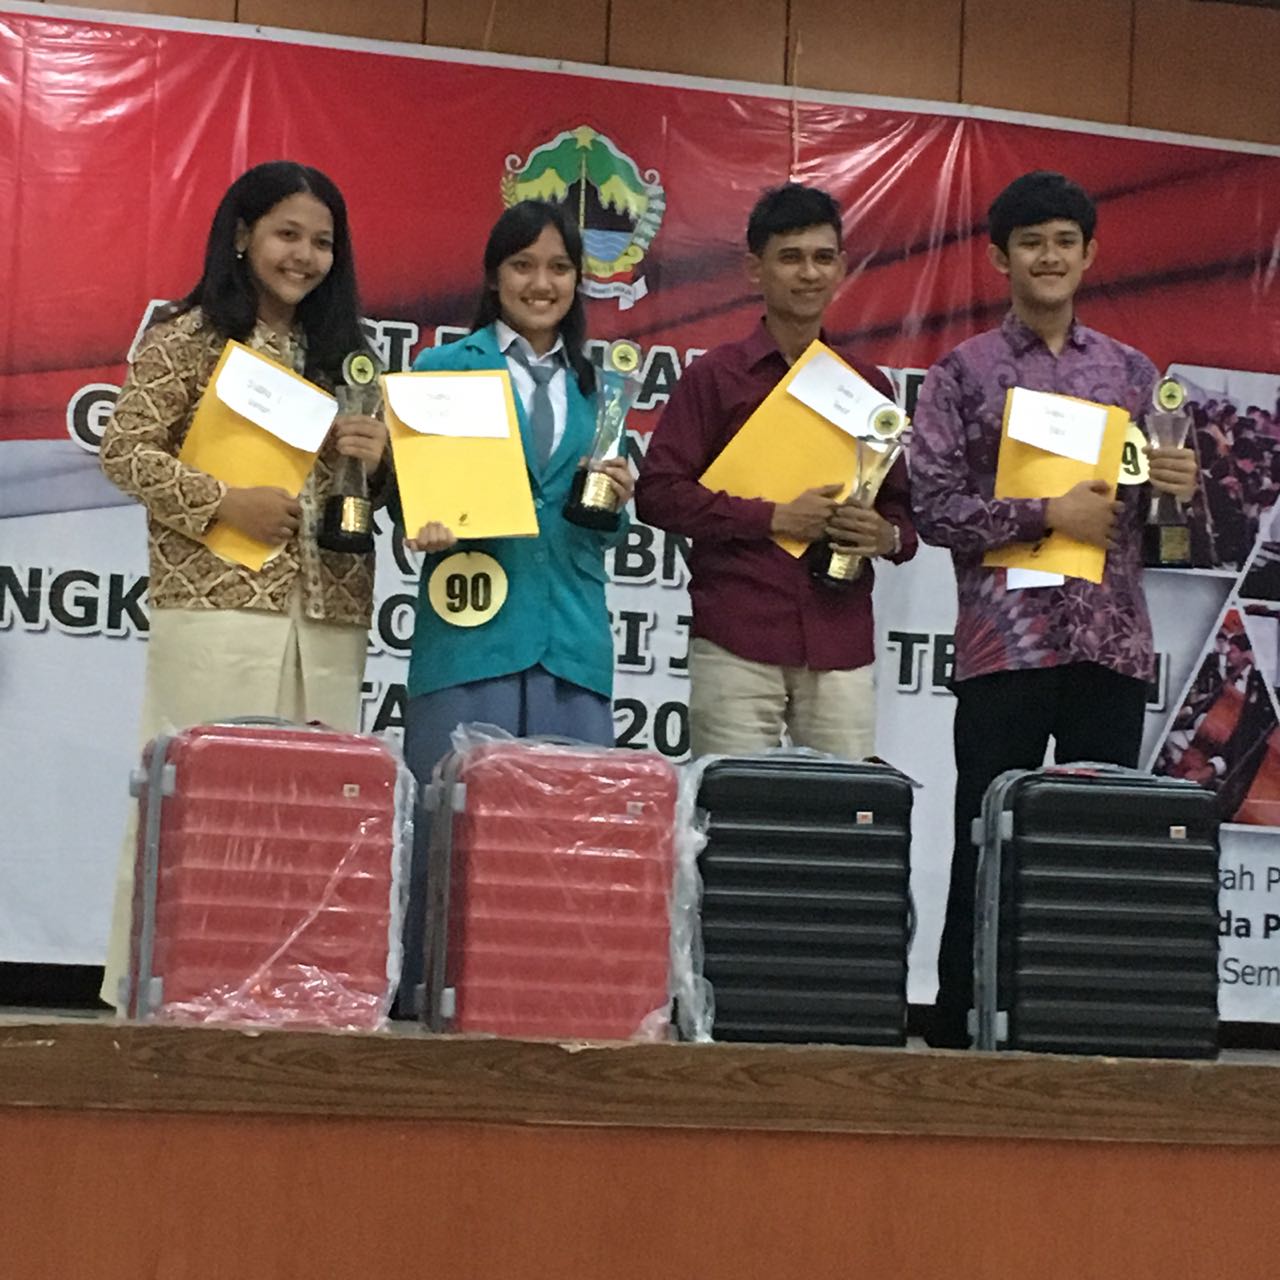 Foto Audisi Paduan Suara Gita Bahana Nusantara Tingkat Provinsi Jawa Tengah 2018